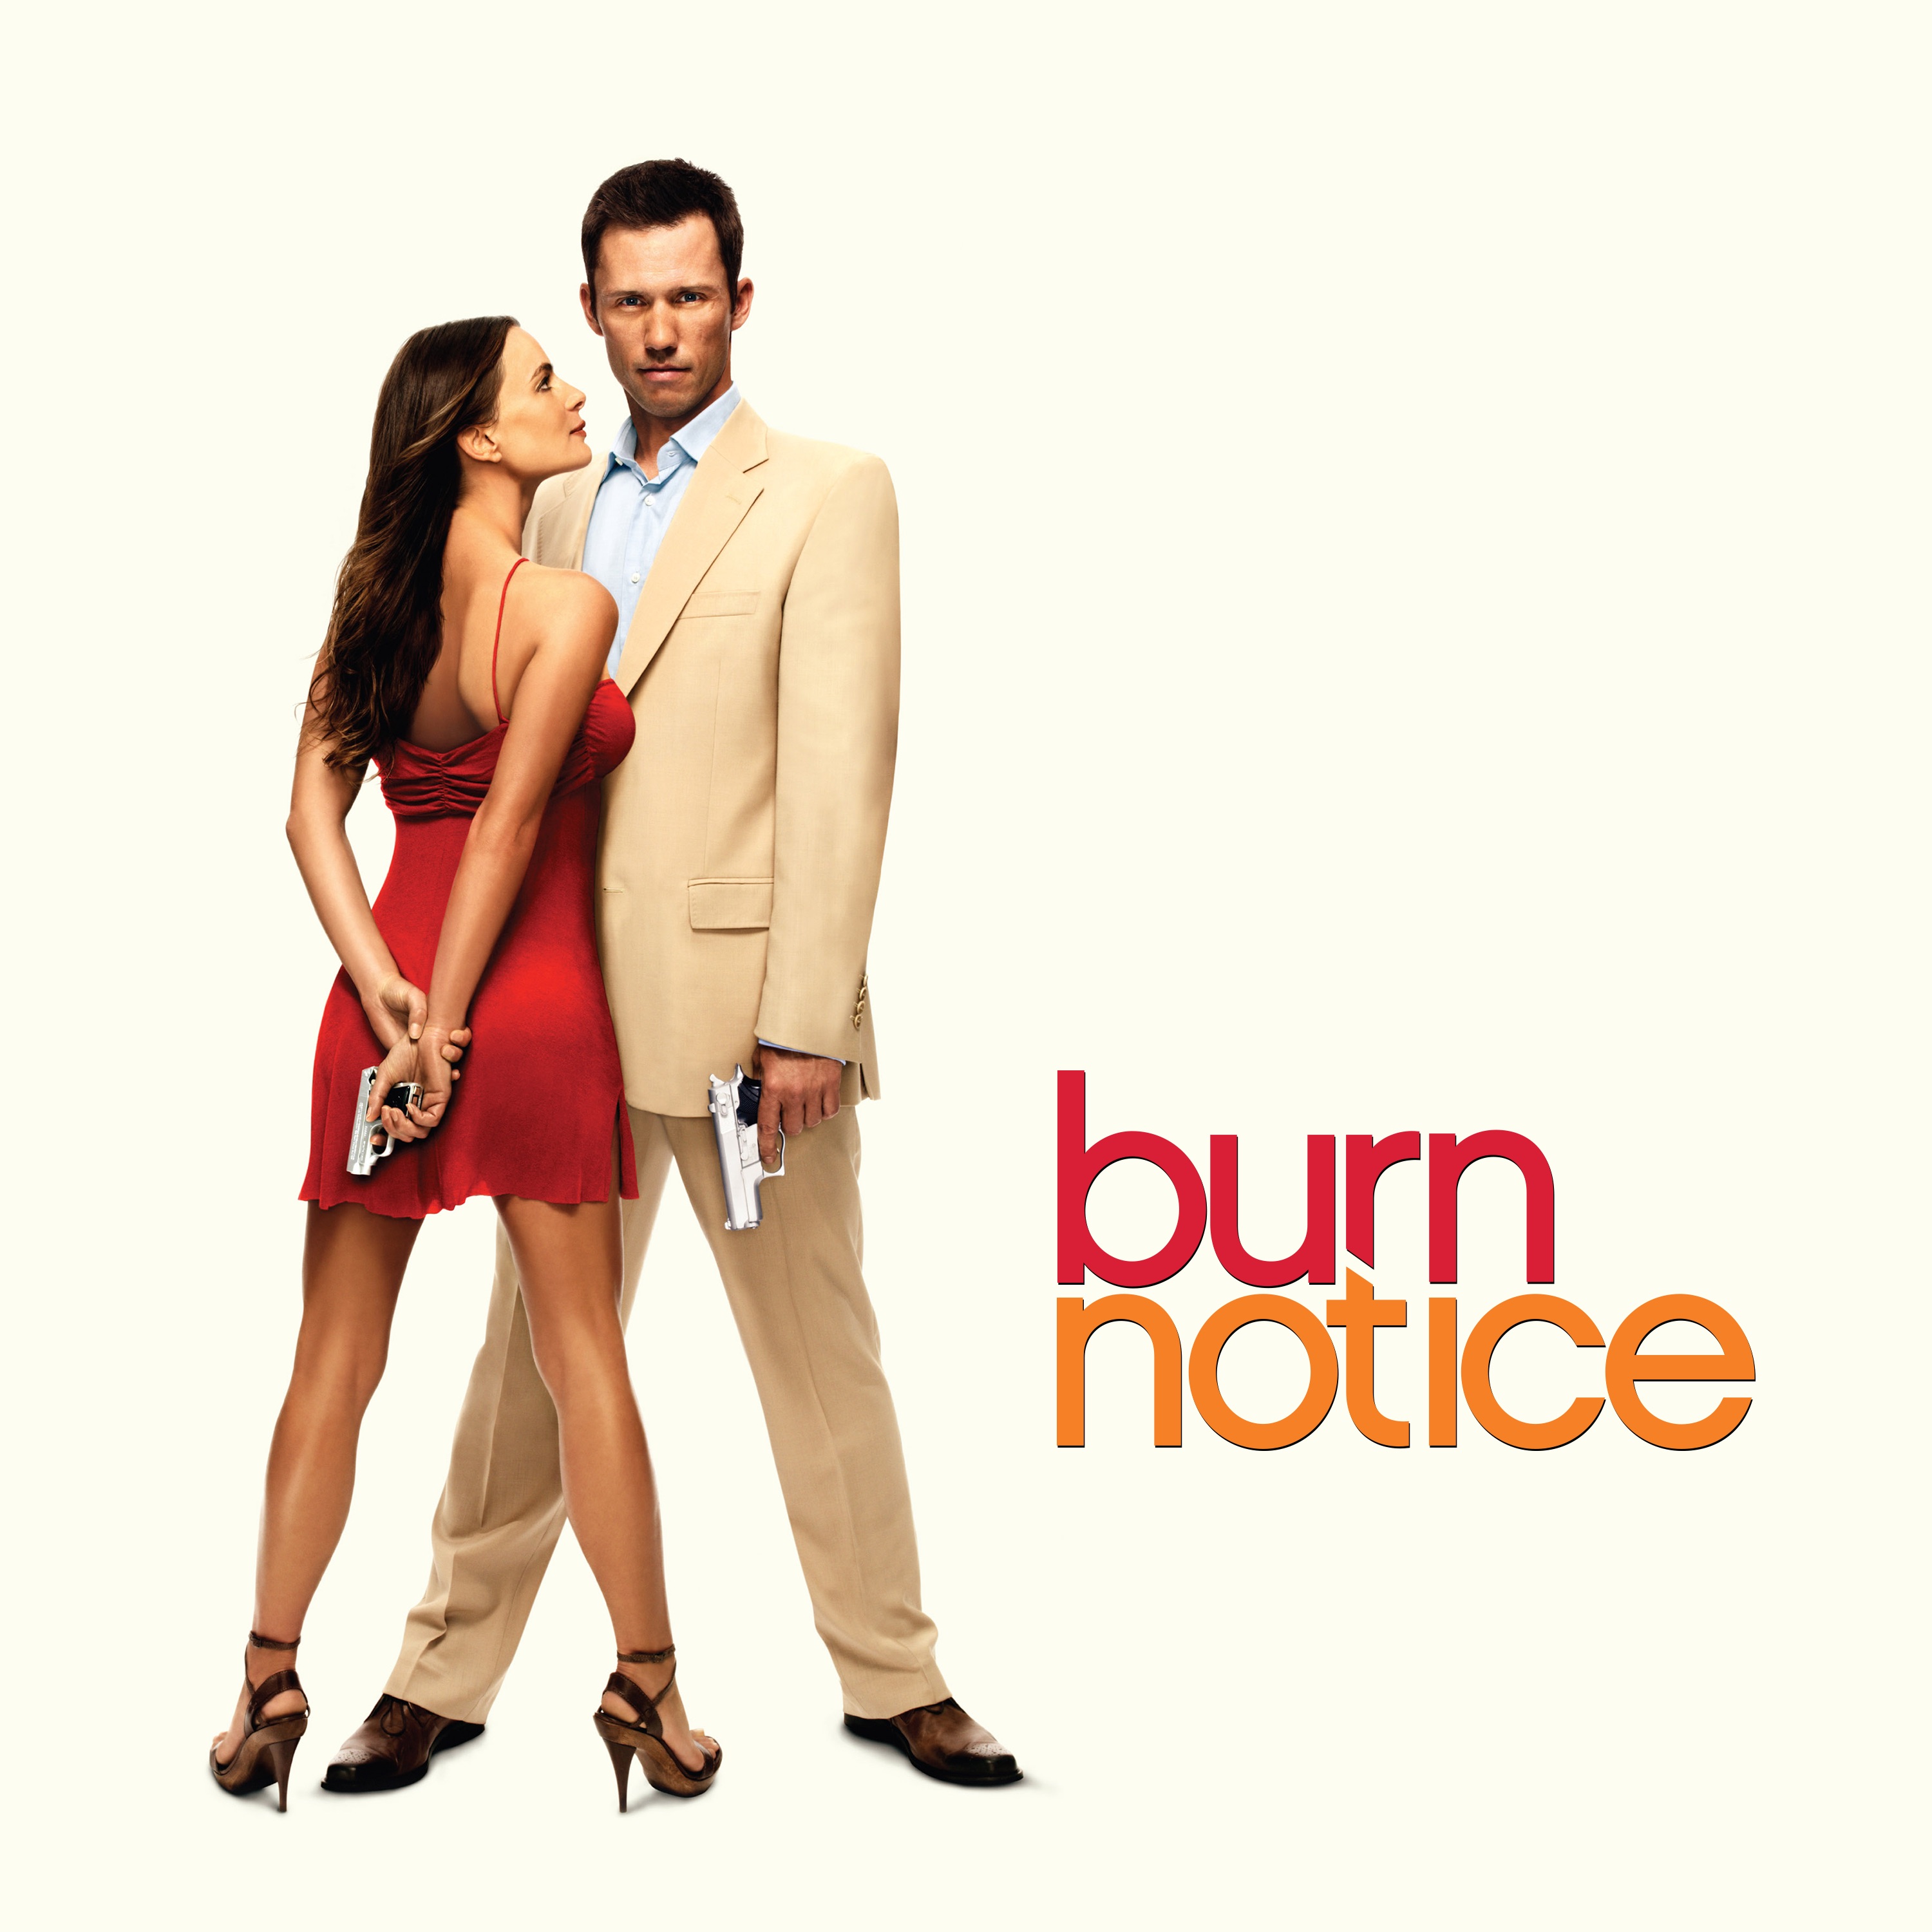 burn notice t.v.show